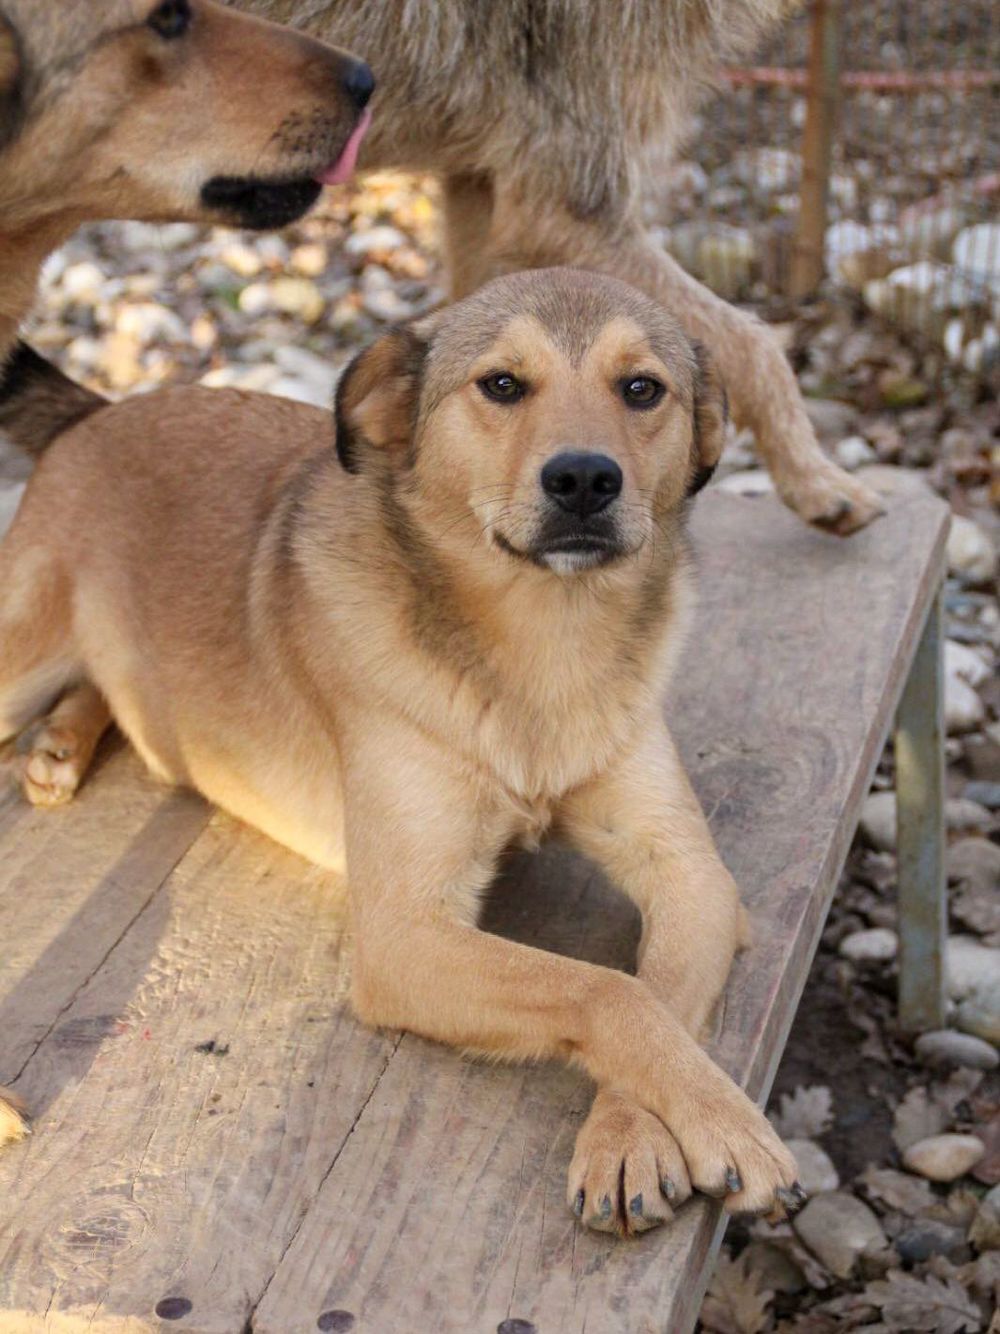 BONGO - Herzenshund zum Verlieben! (Video)